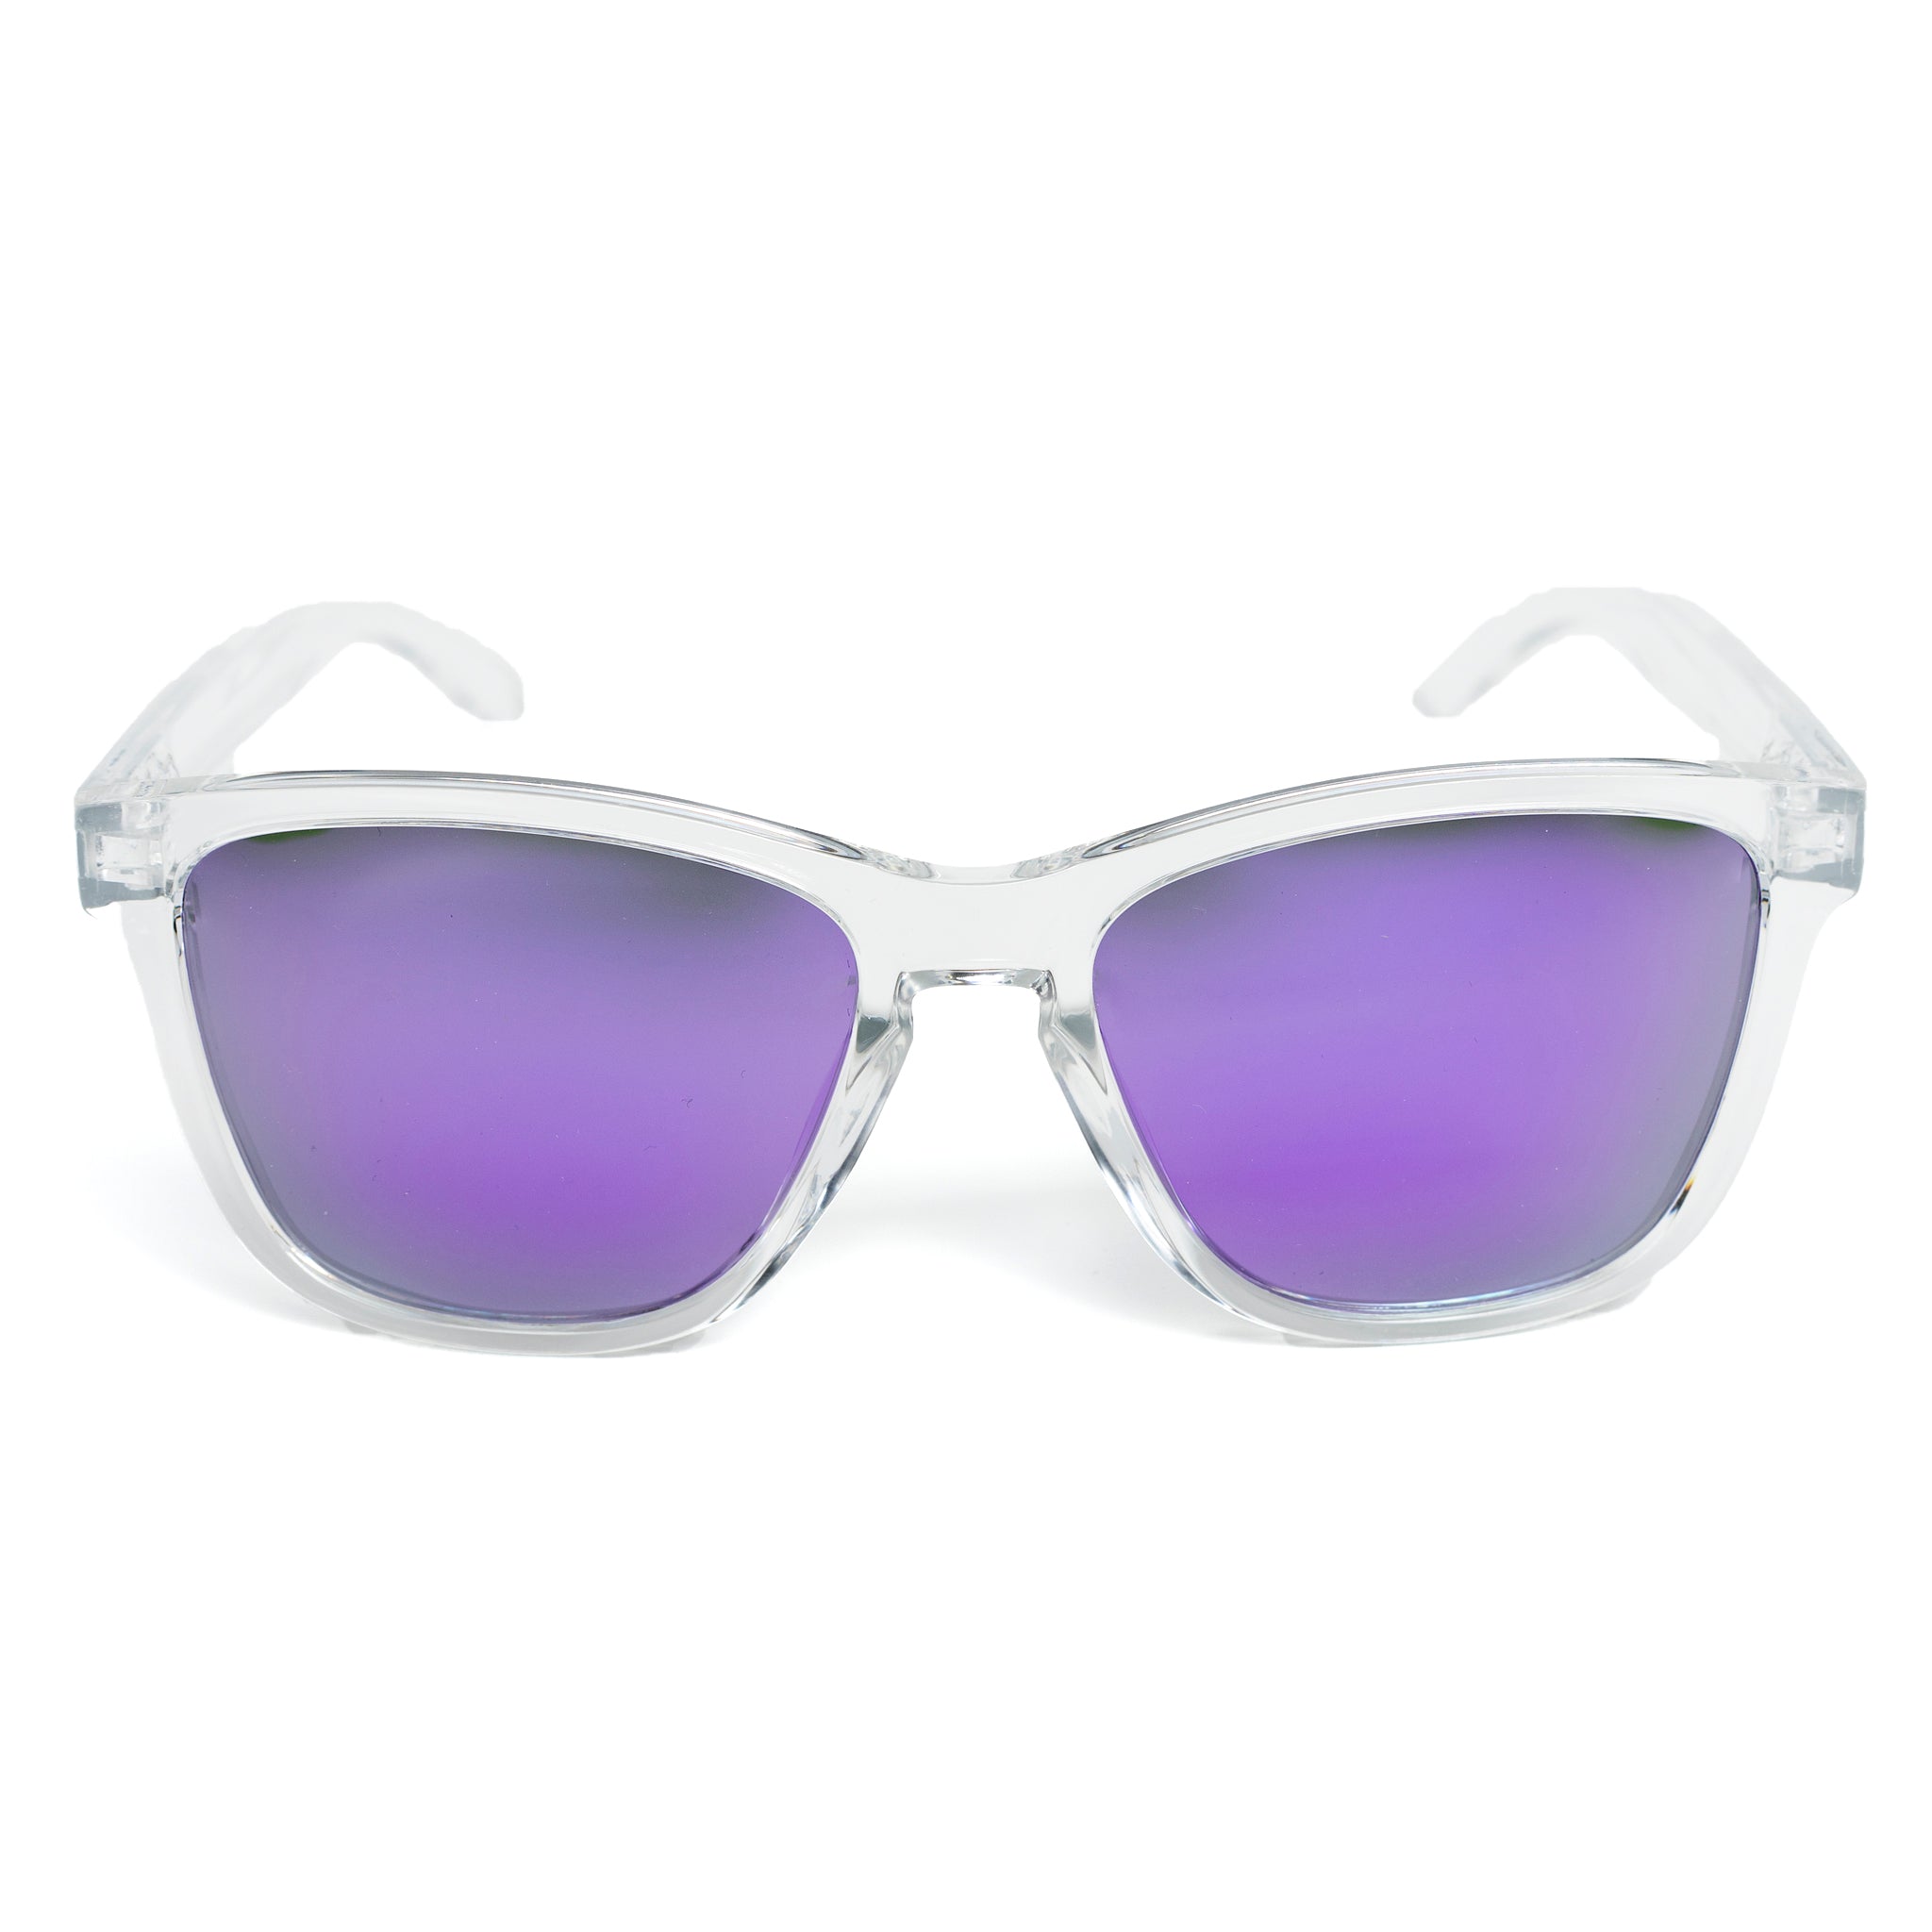 Humboldt Polarized Sunglasses 3332-11